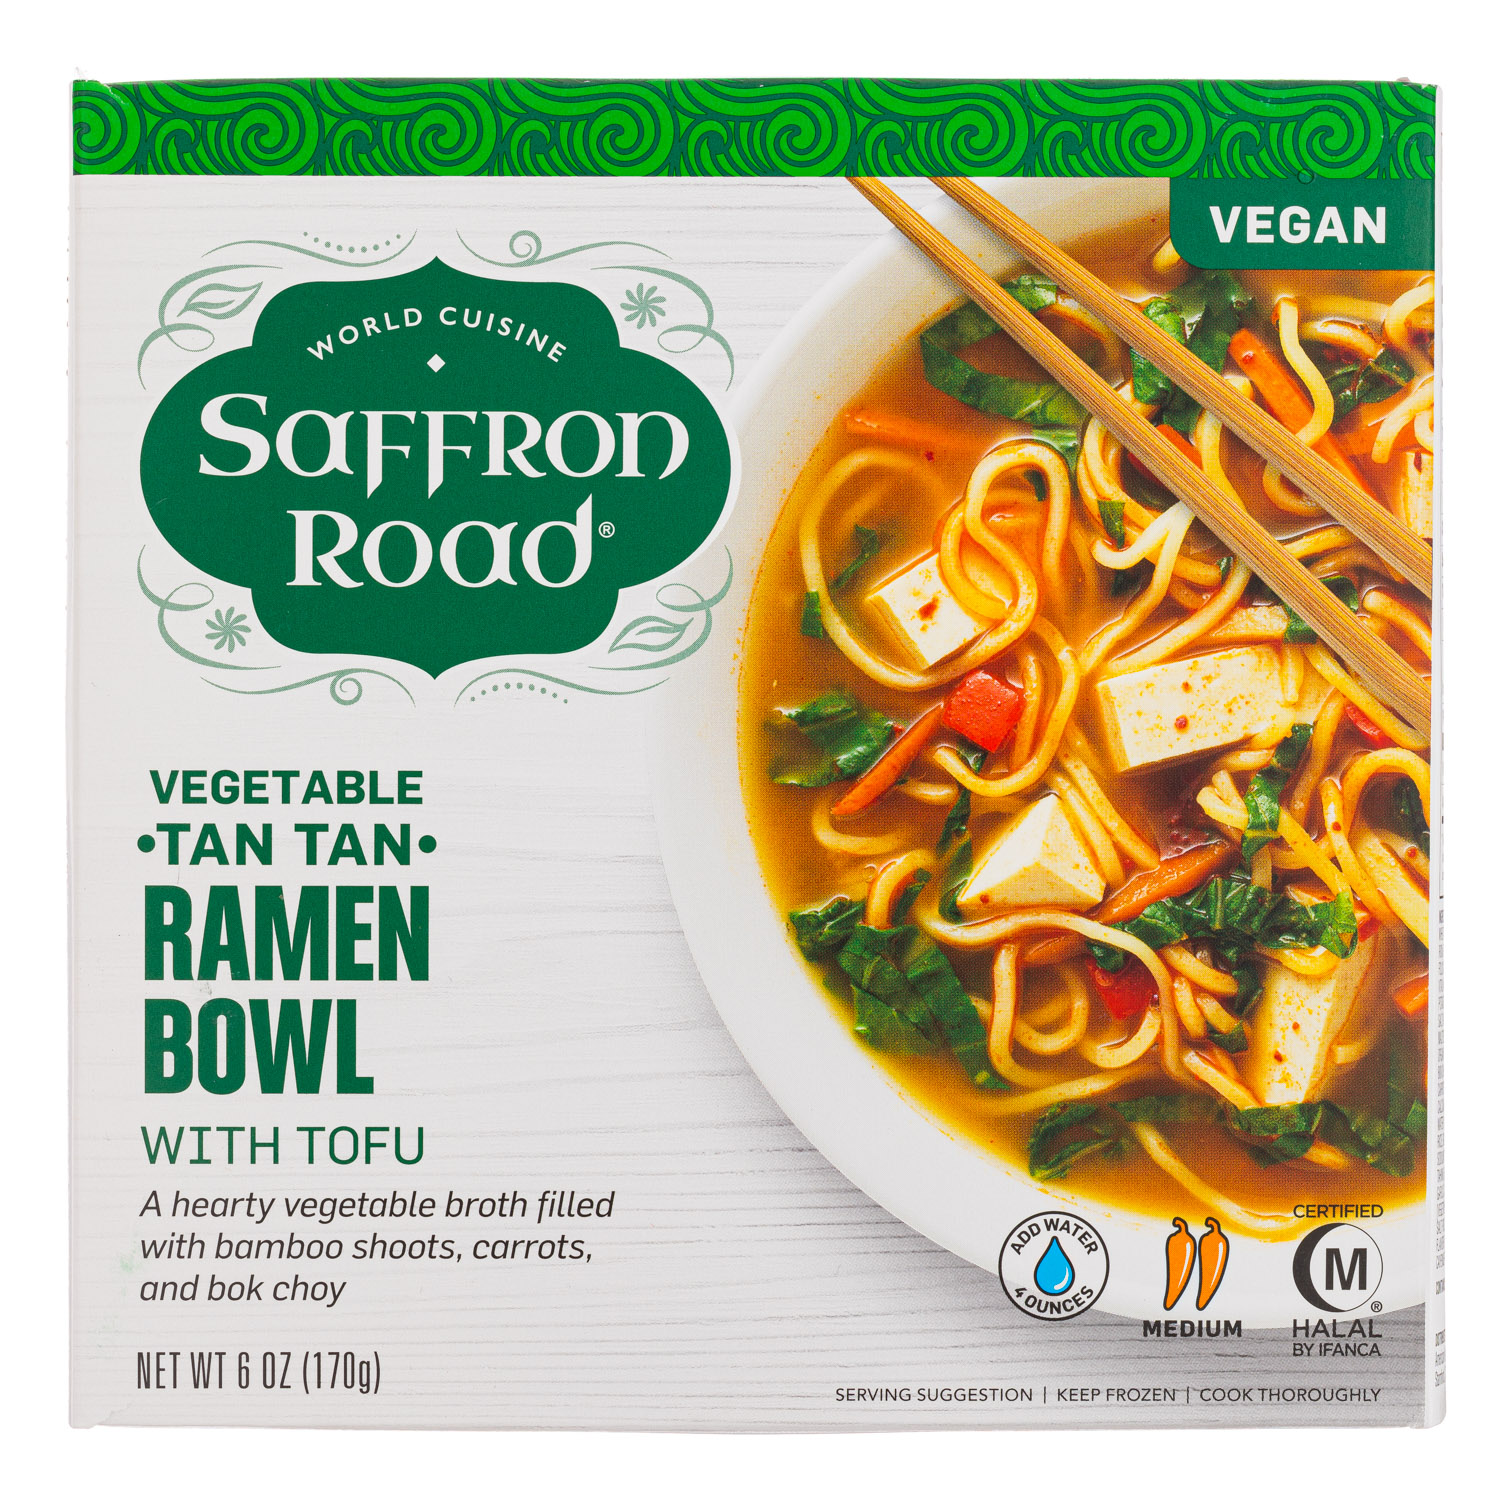 Vegetable Tan Tan Ramen Bowl with Tofu